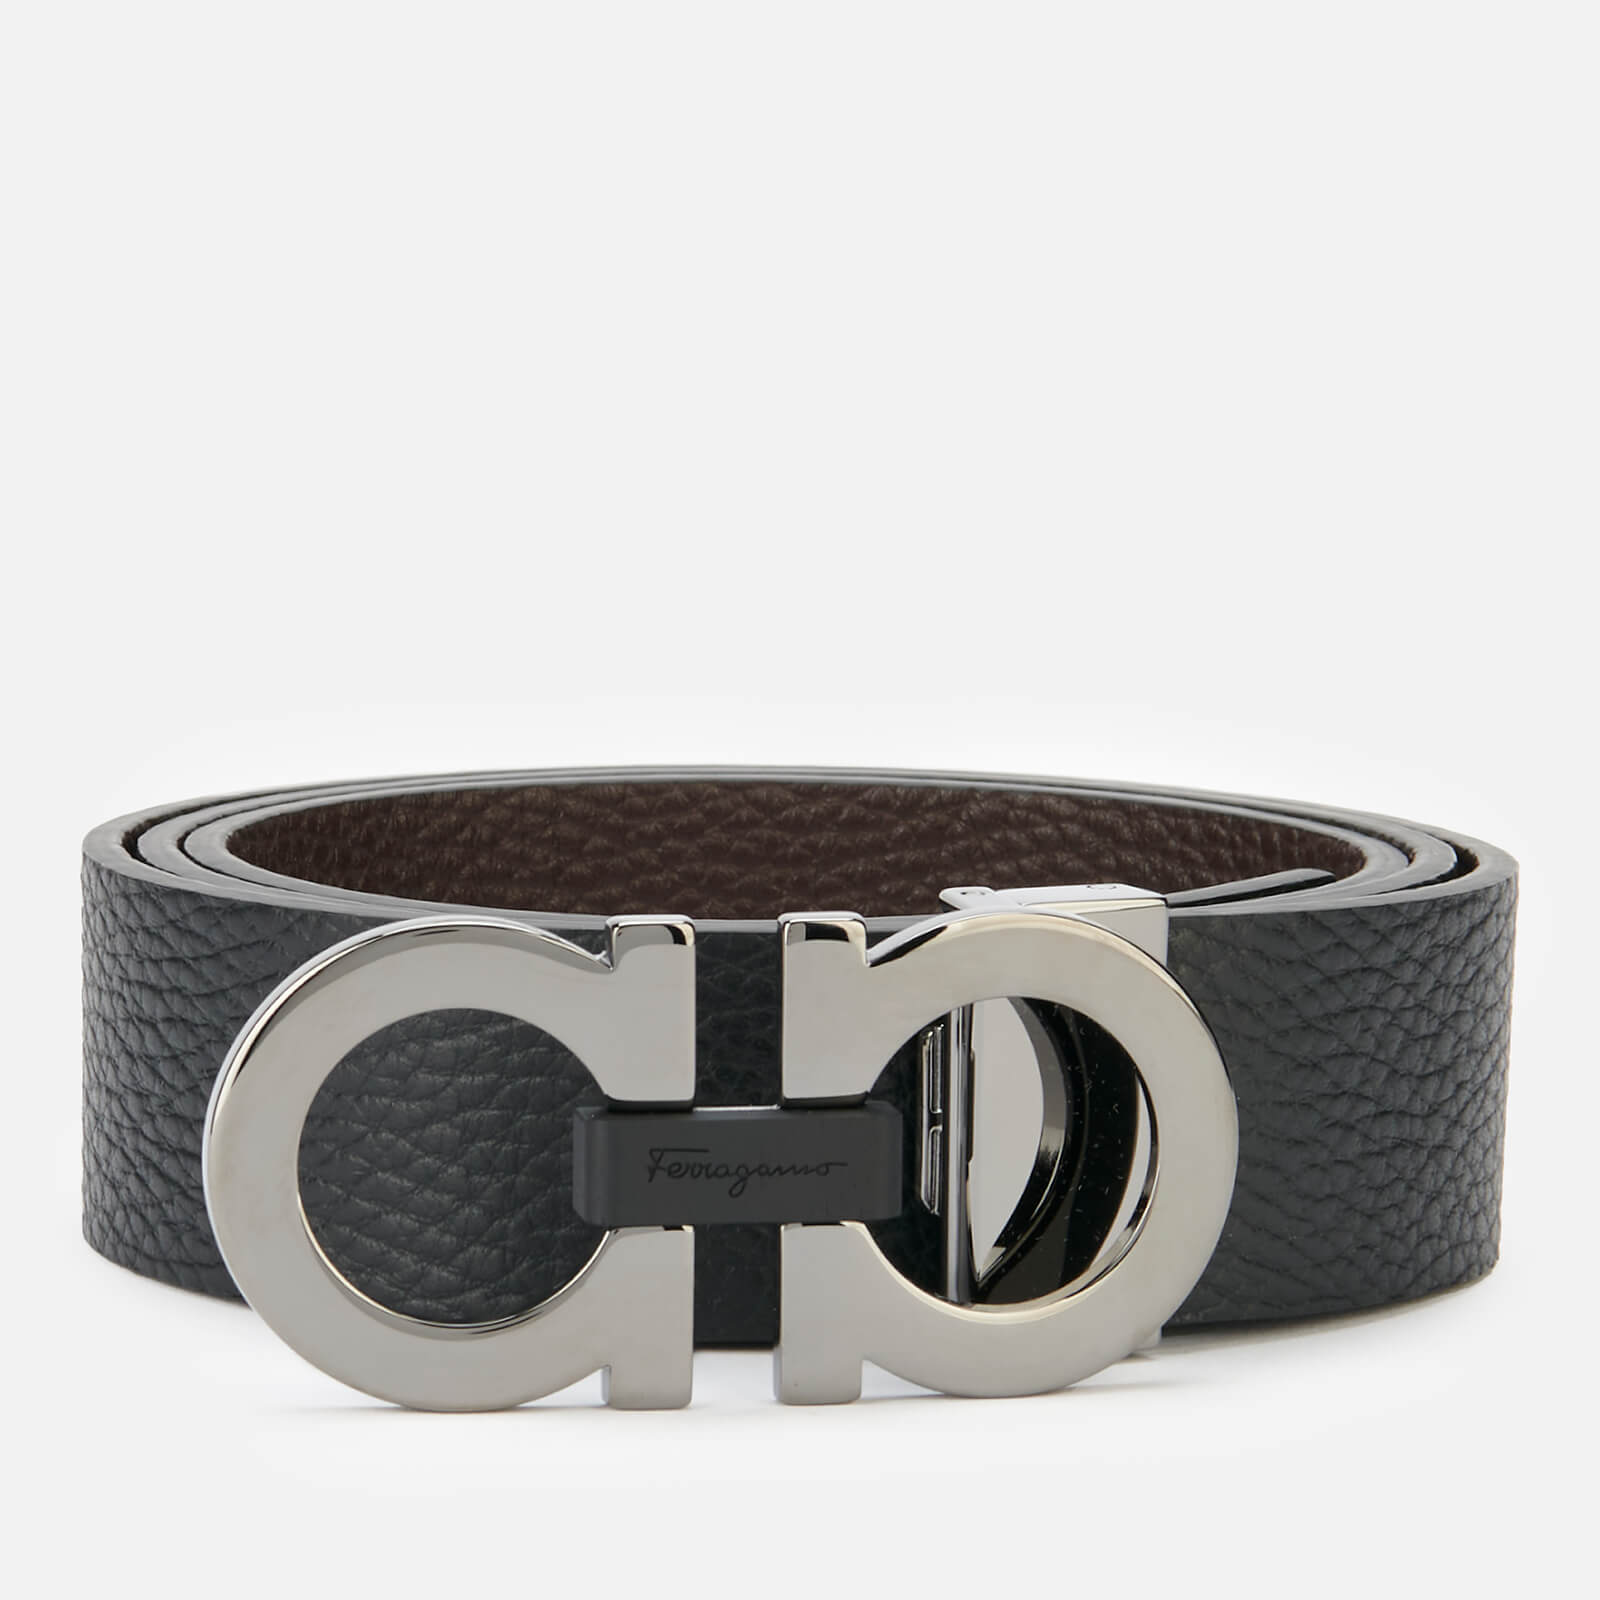 Salvatore Ferragamo Men's Reversible And Adjustable Gancini Belt - Black/Hickory - 90cm/S